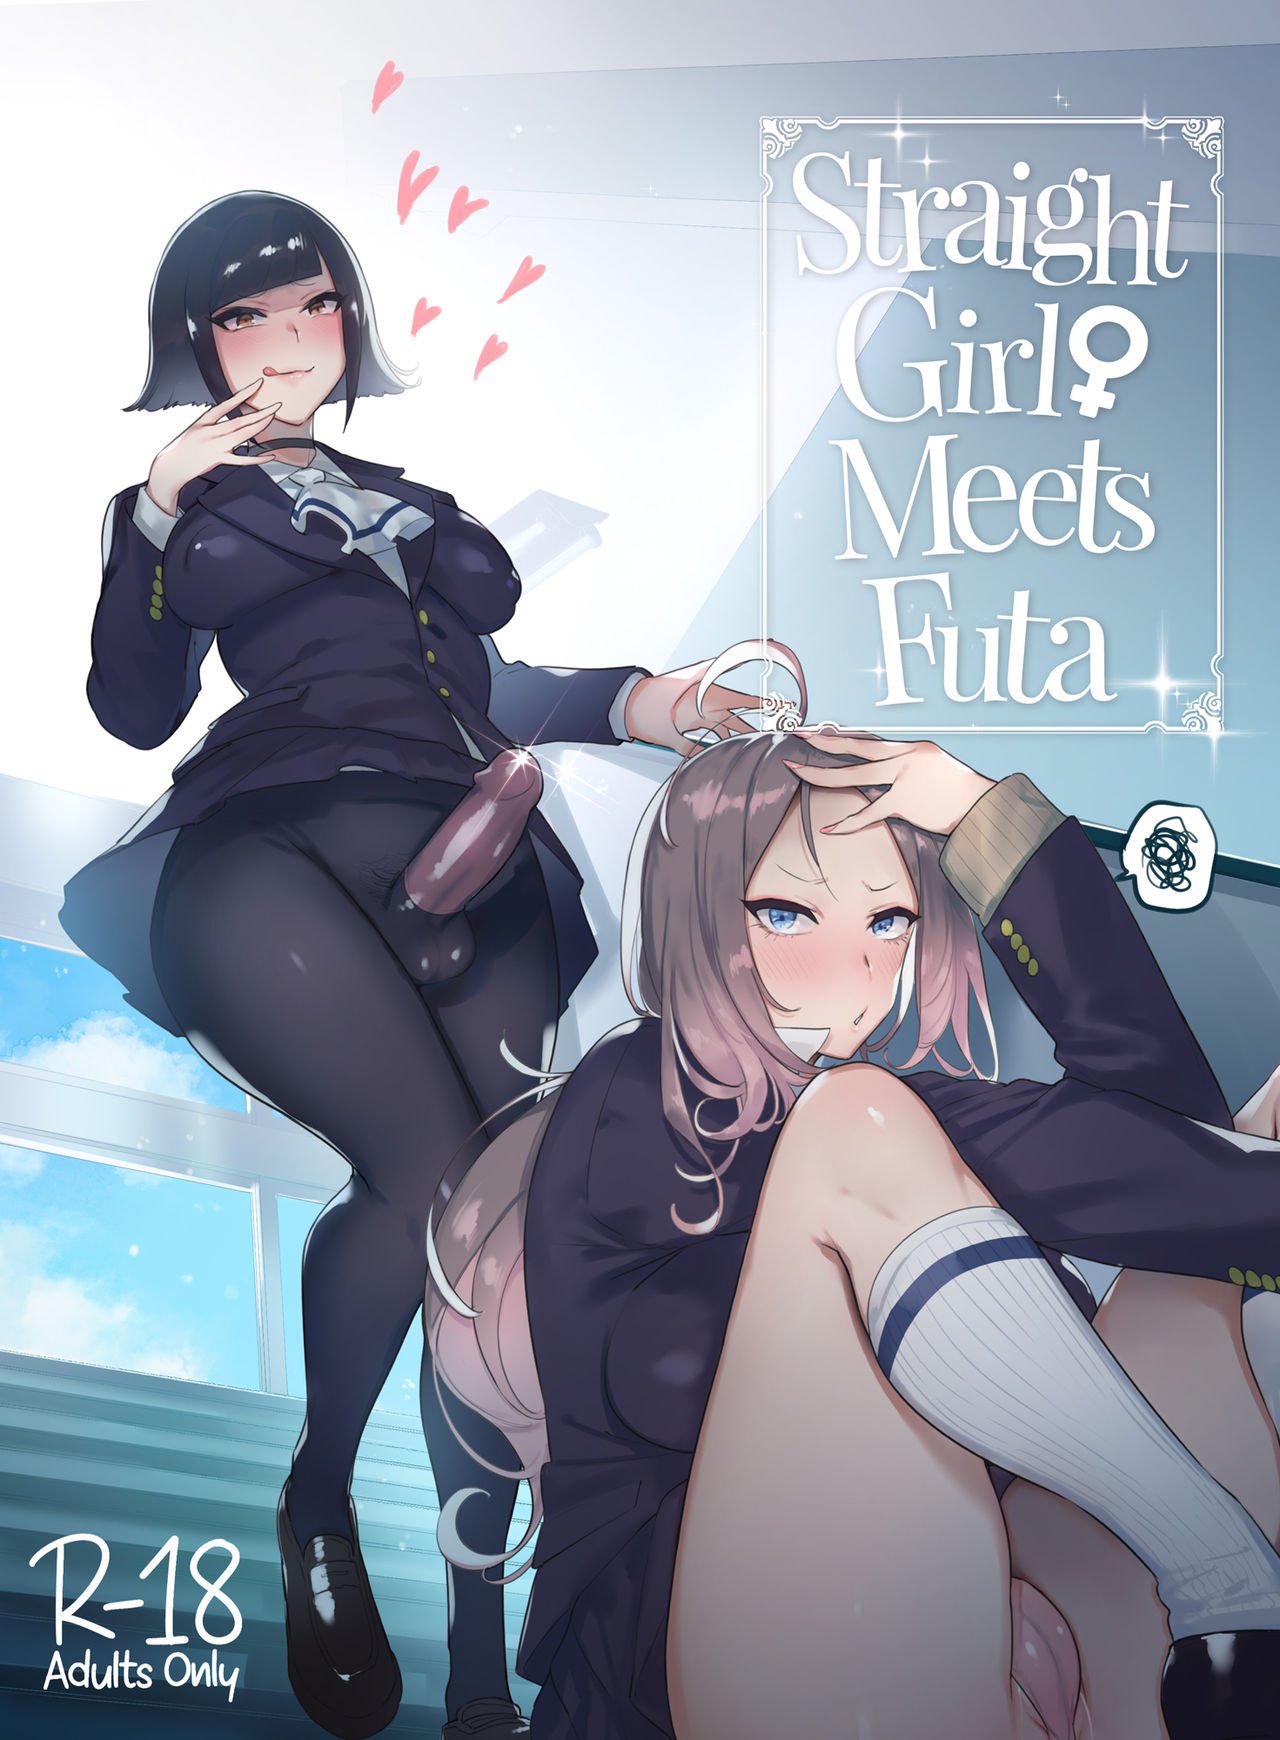 Futa and girl porn comic